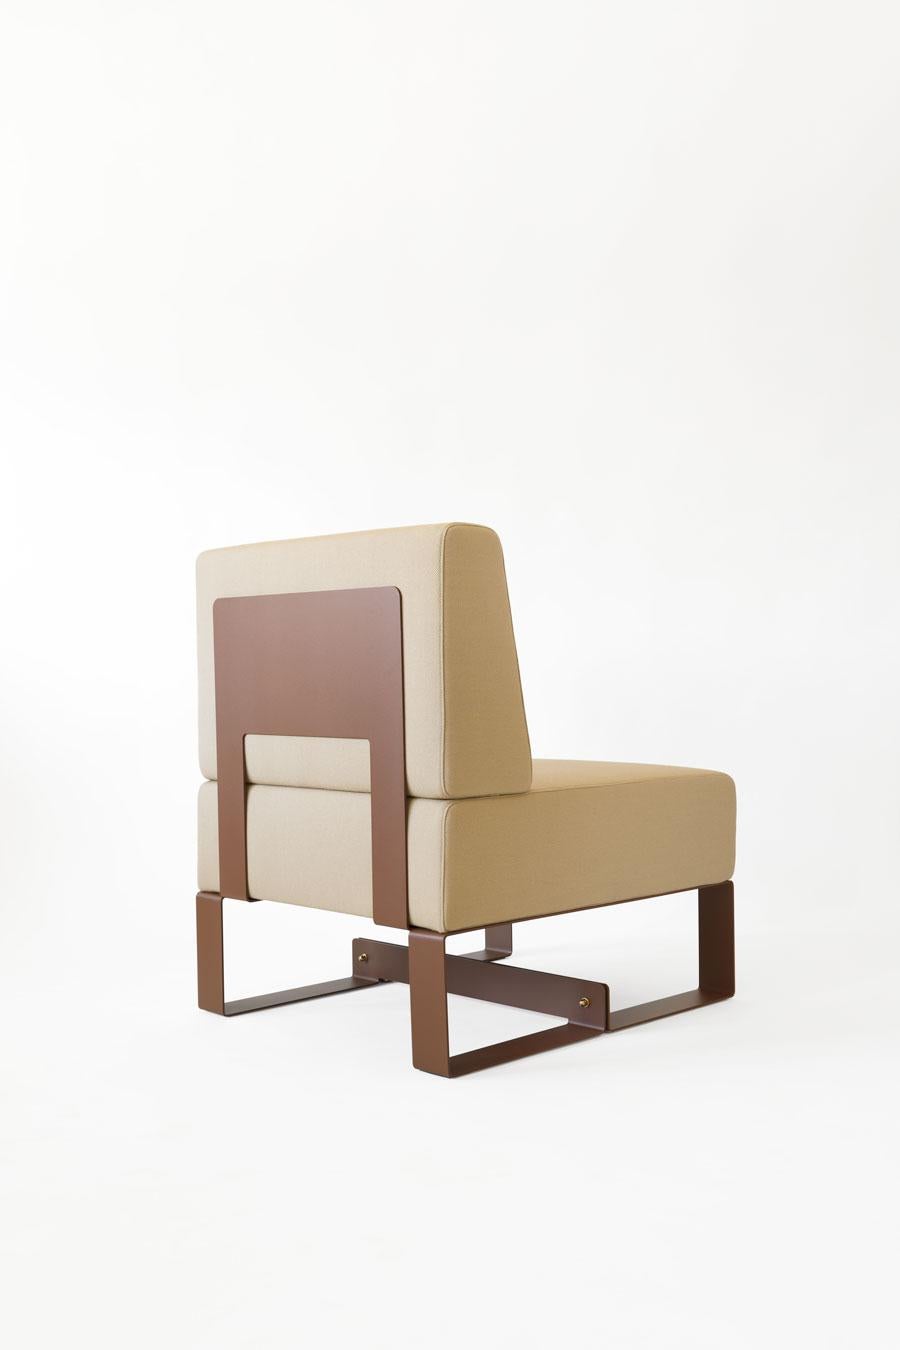 Metal Adolfo Abejon Contemporary 'Cubit' Brown Sculptural Easy Chair